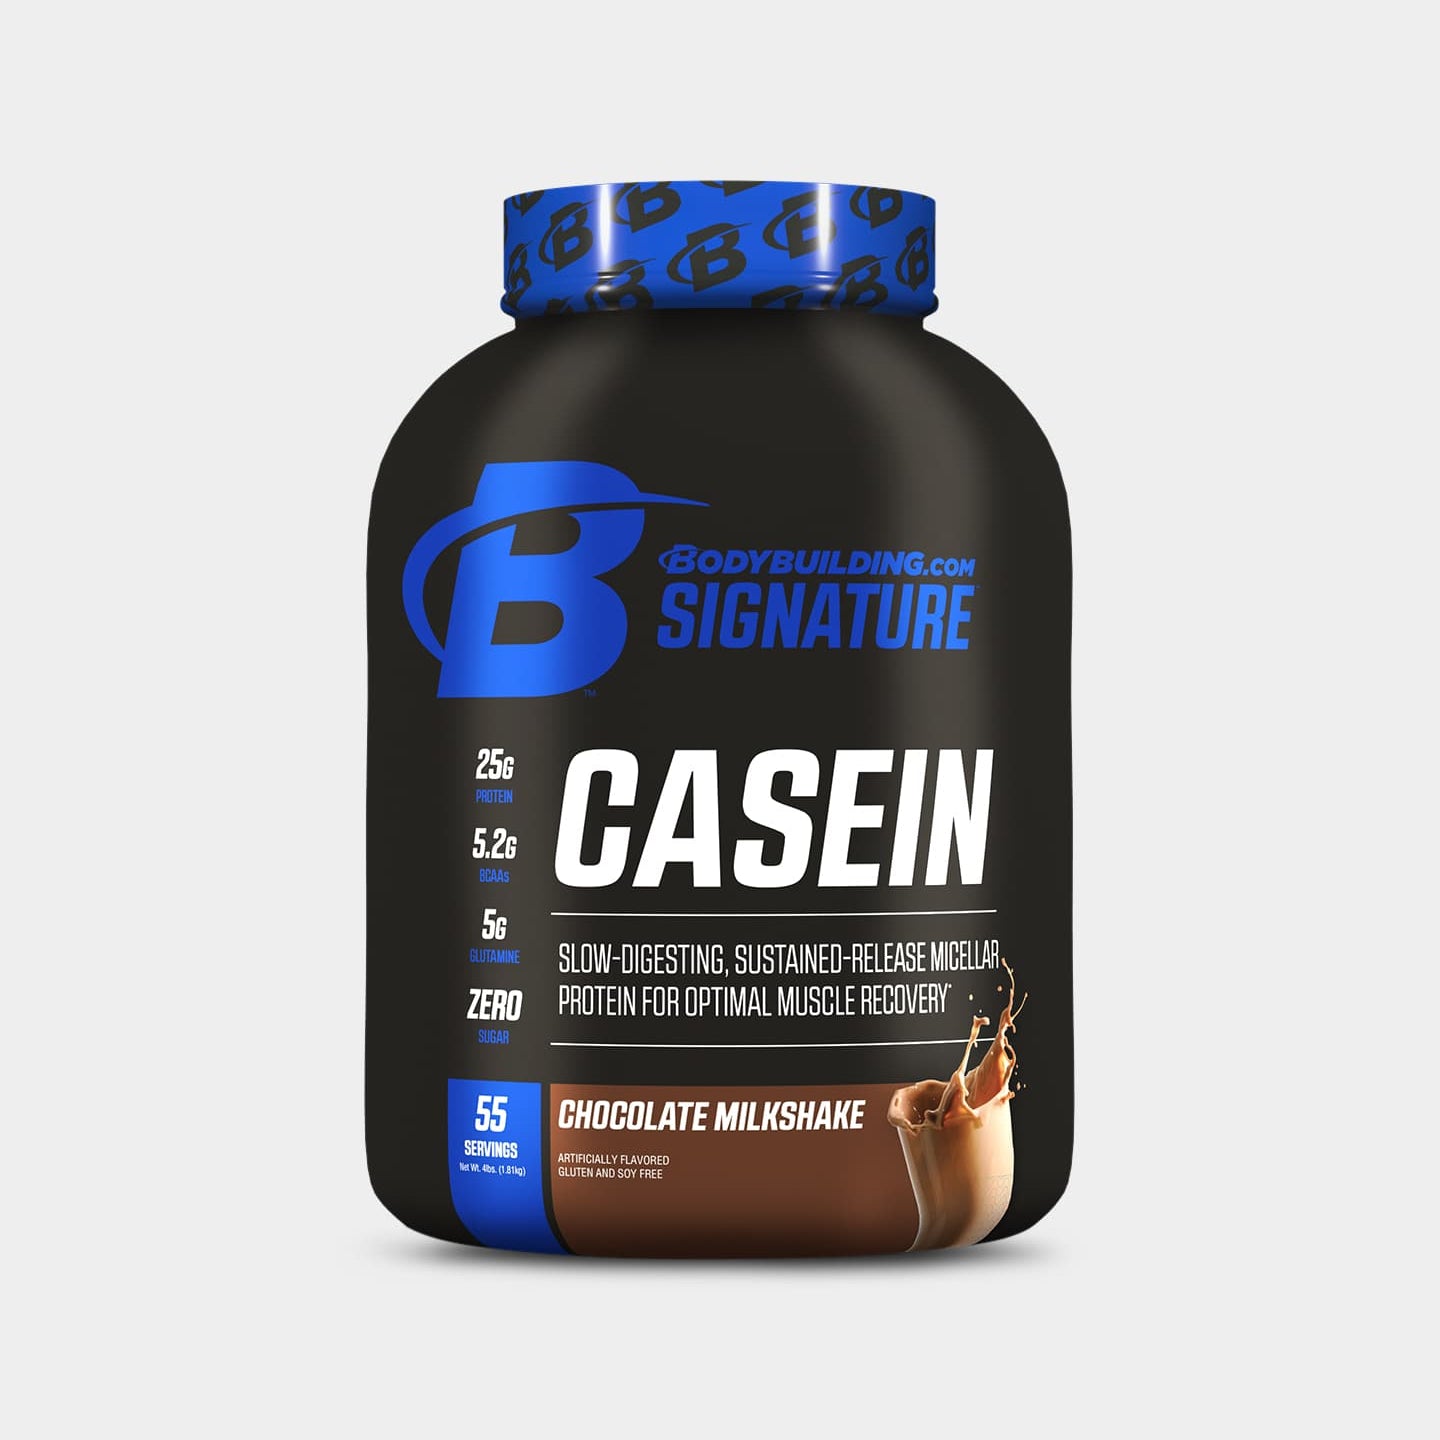 Bodybuilding.com Signature Casein Protein Choc 5lb, Black Label Rebrand